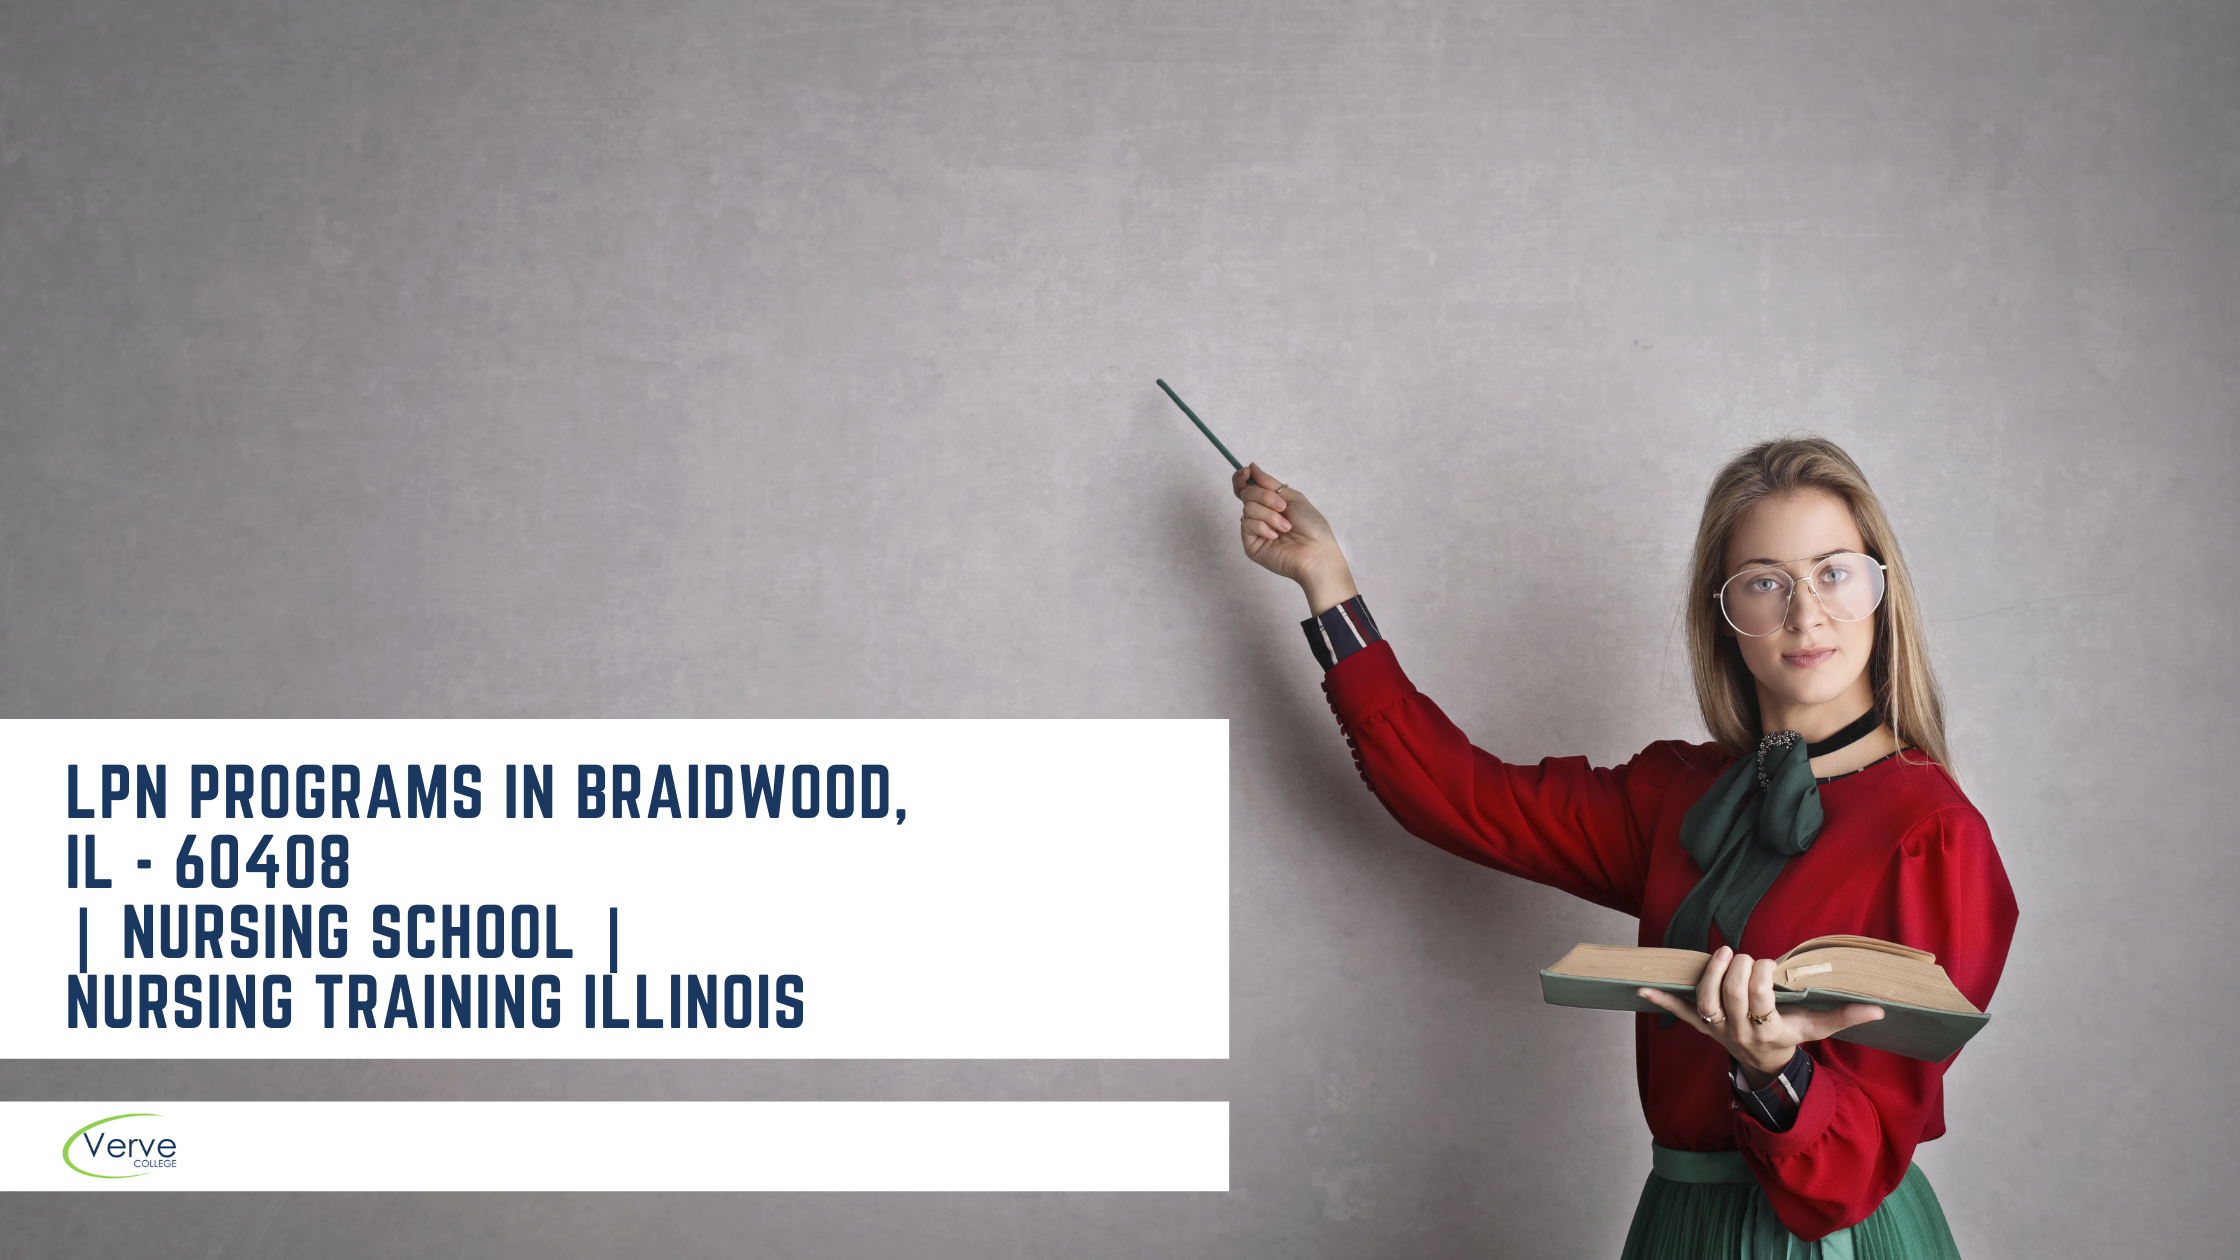 LPN Programs in Braidwood, IL – 60408 | Nursing School | Nursing Training Illinois